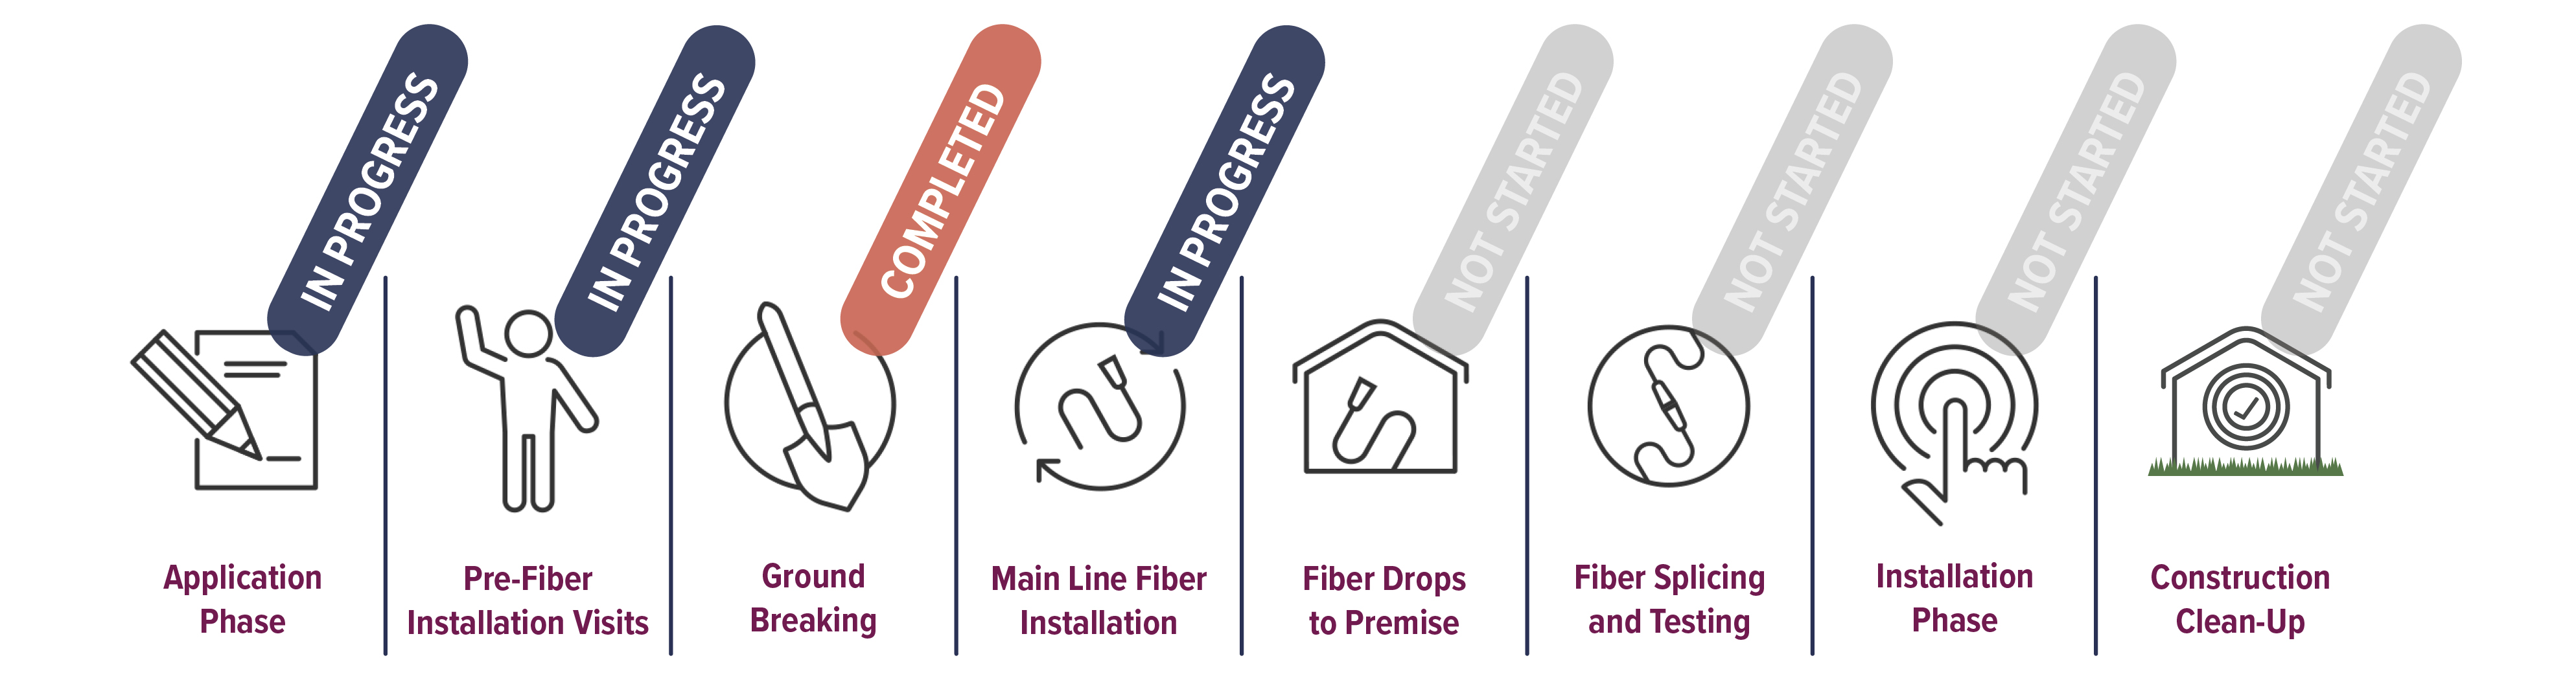 Project progress for fiber-optic Internet in Minnesota